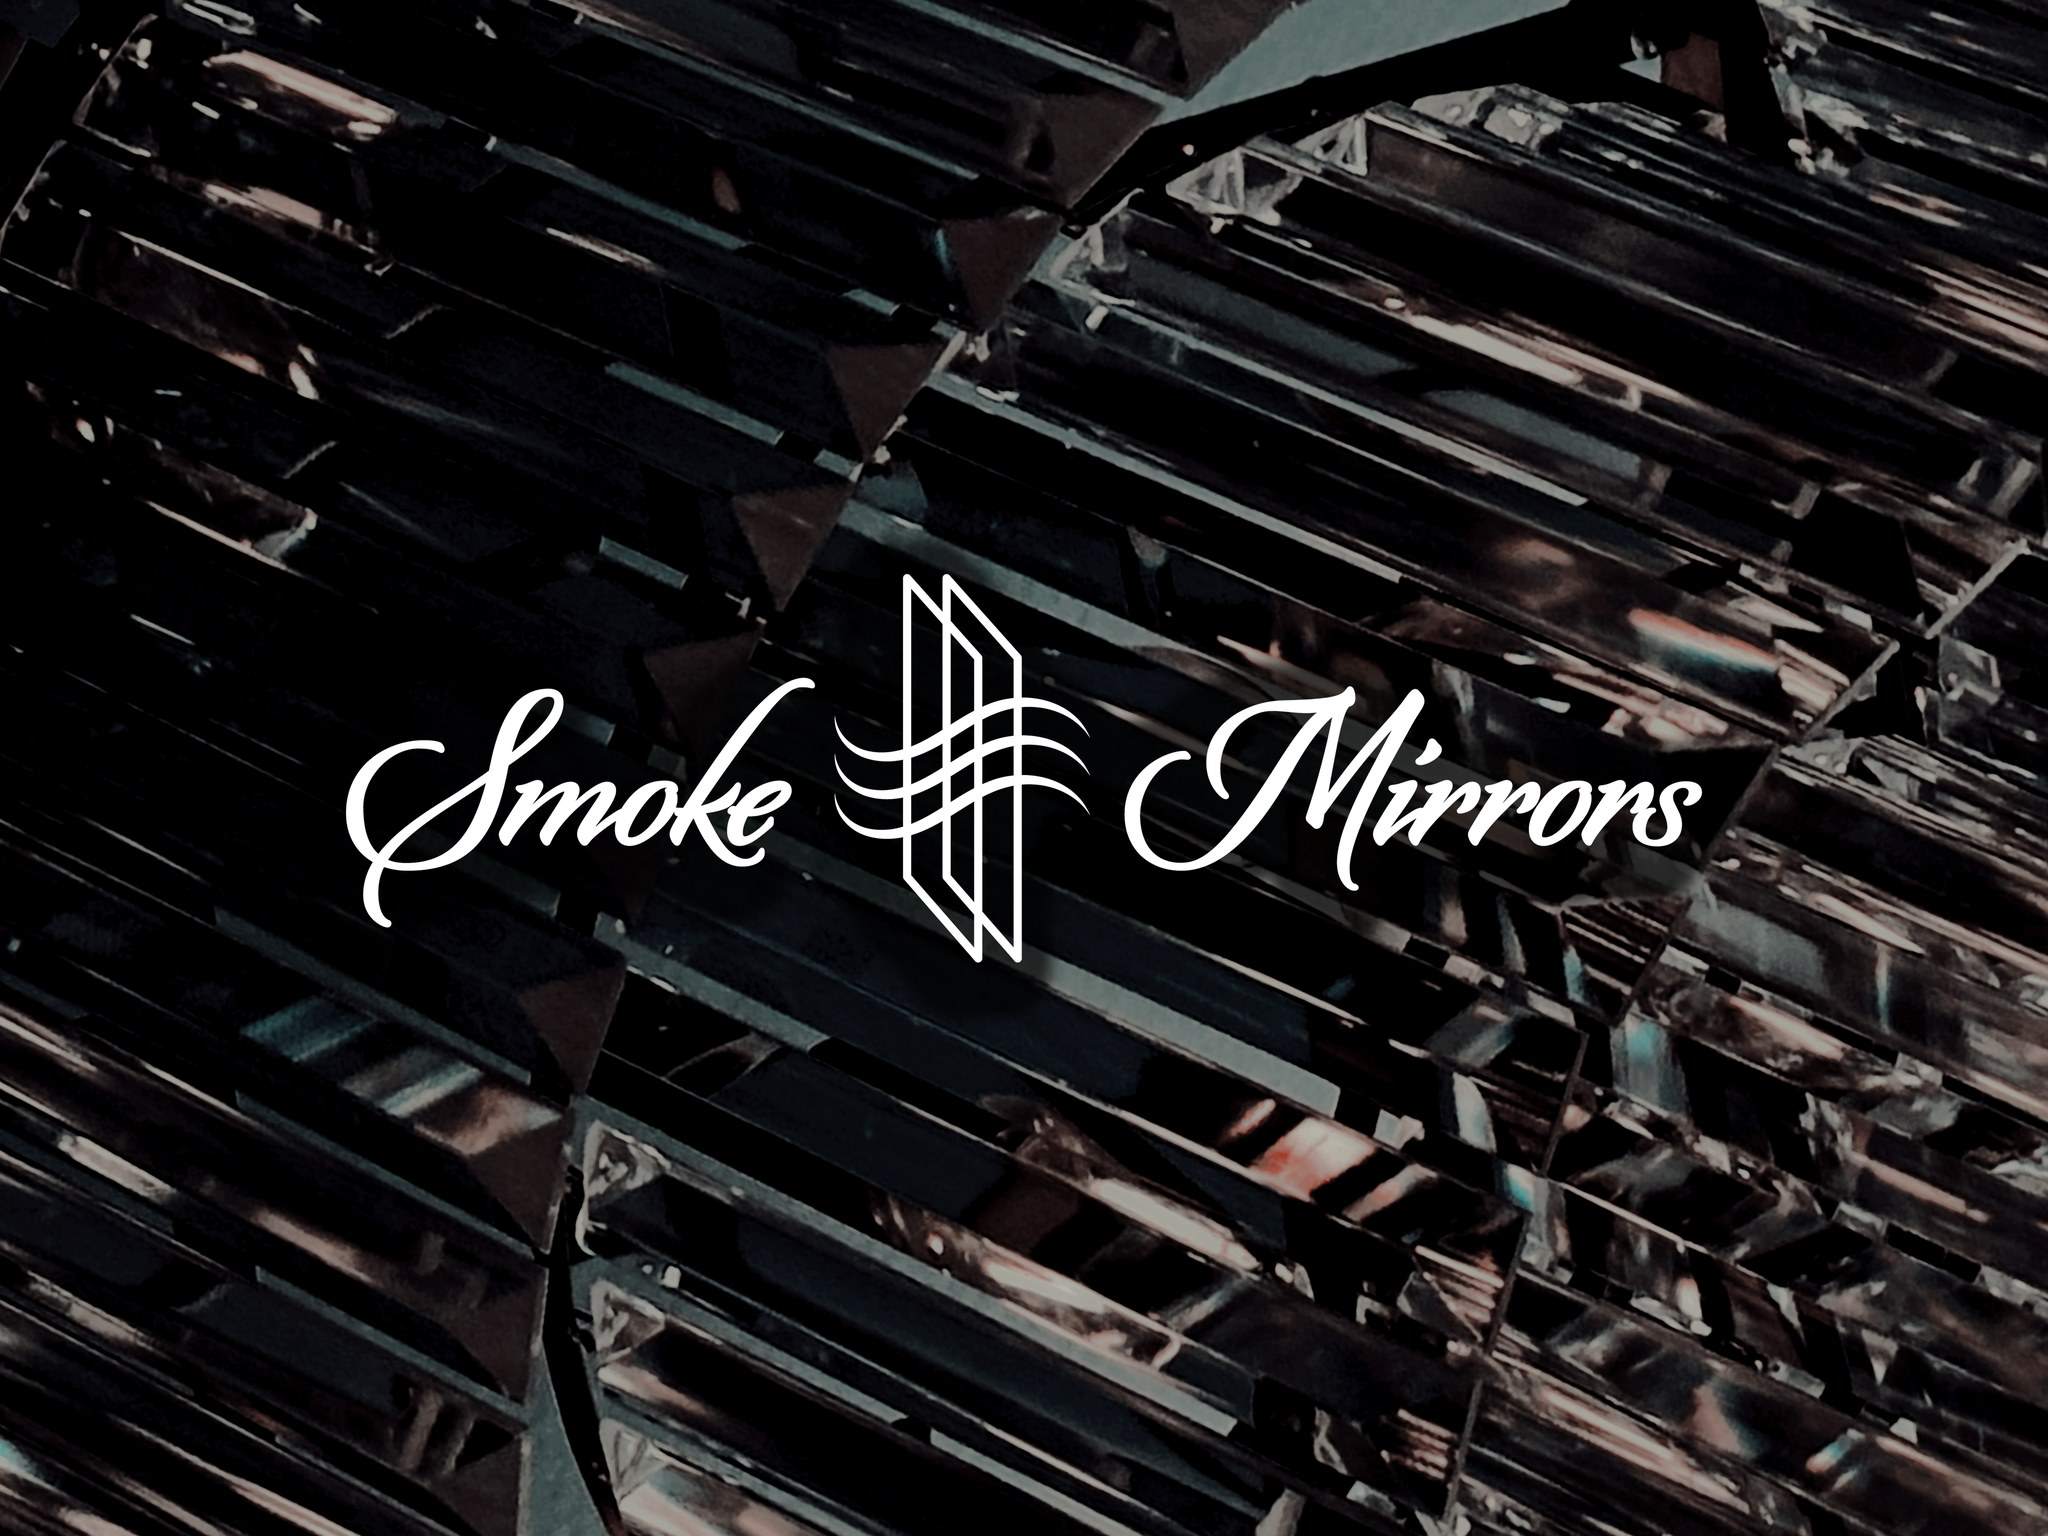 Smoke & Mirrors photo